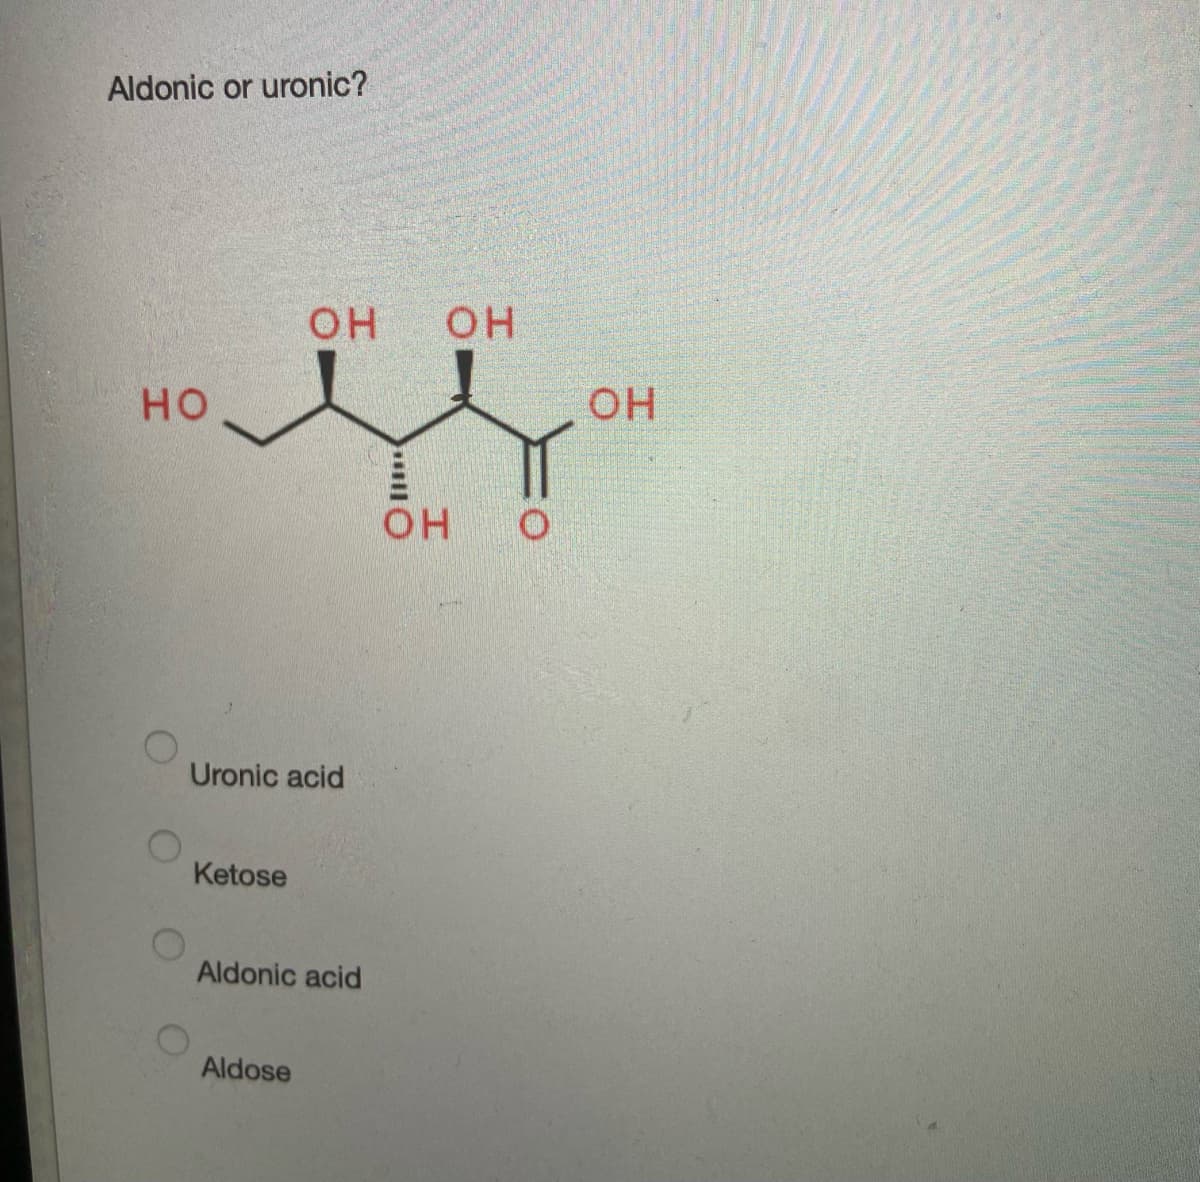 Aldonic or uronic?
НО
Uronic acid
Ketose
OH
Aldonic acid
Aldose
III (
ОН
OH
О
ОН